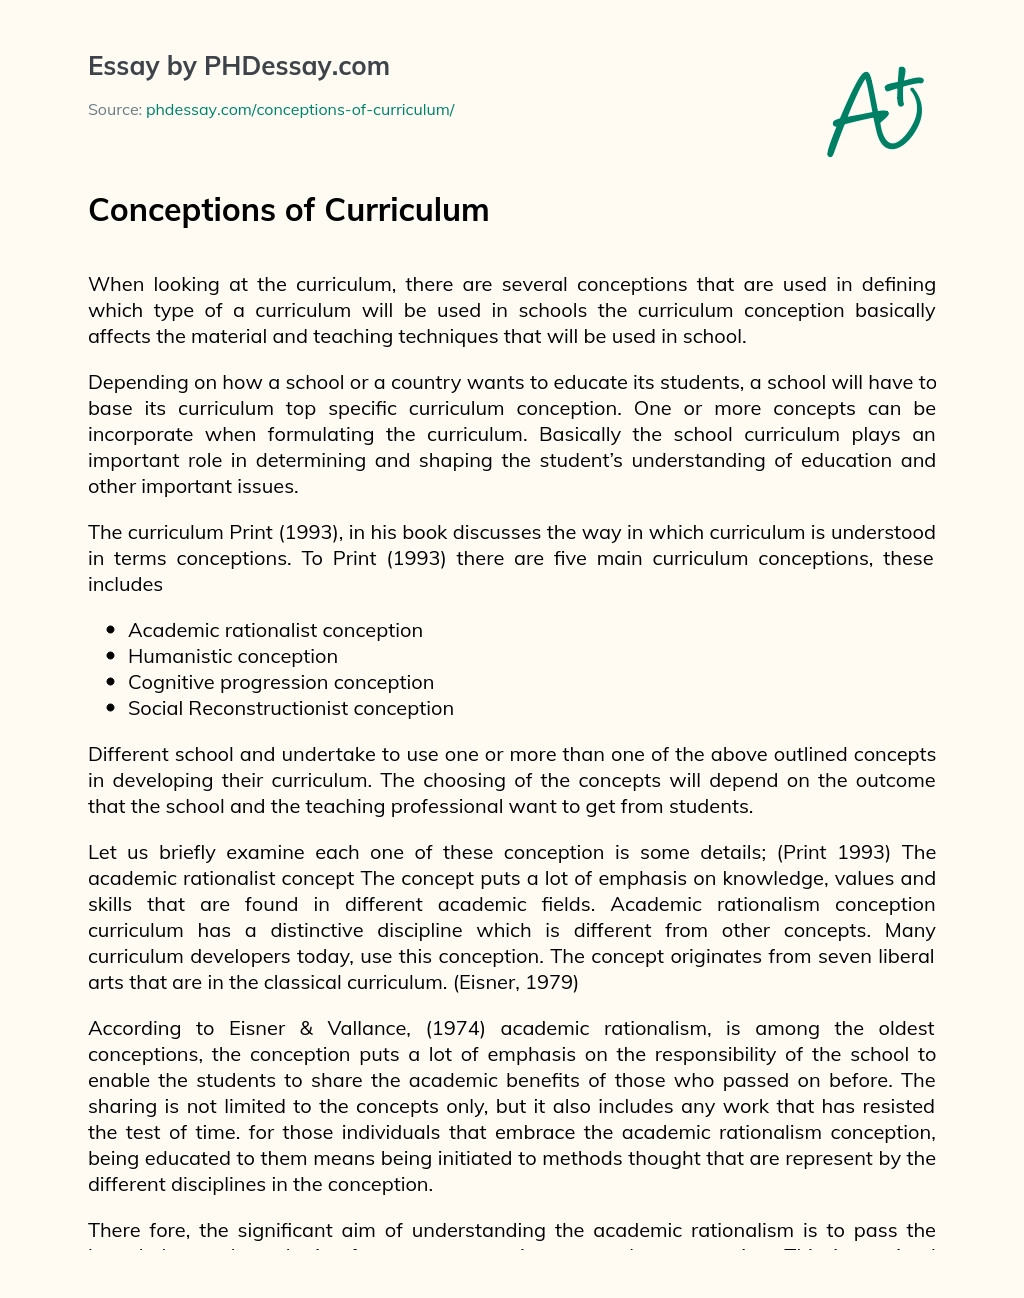 Conceptions of Curriculum essay